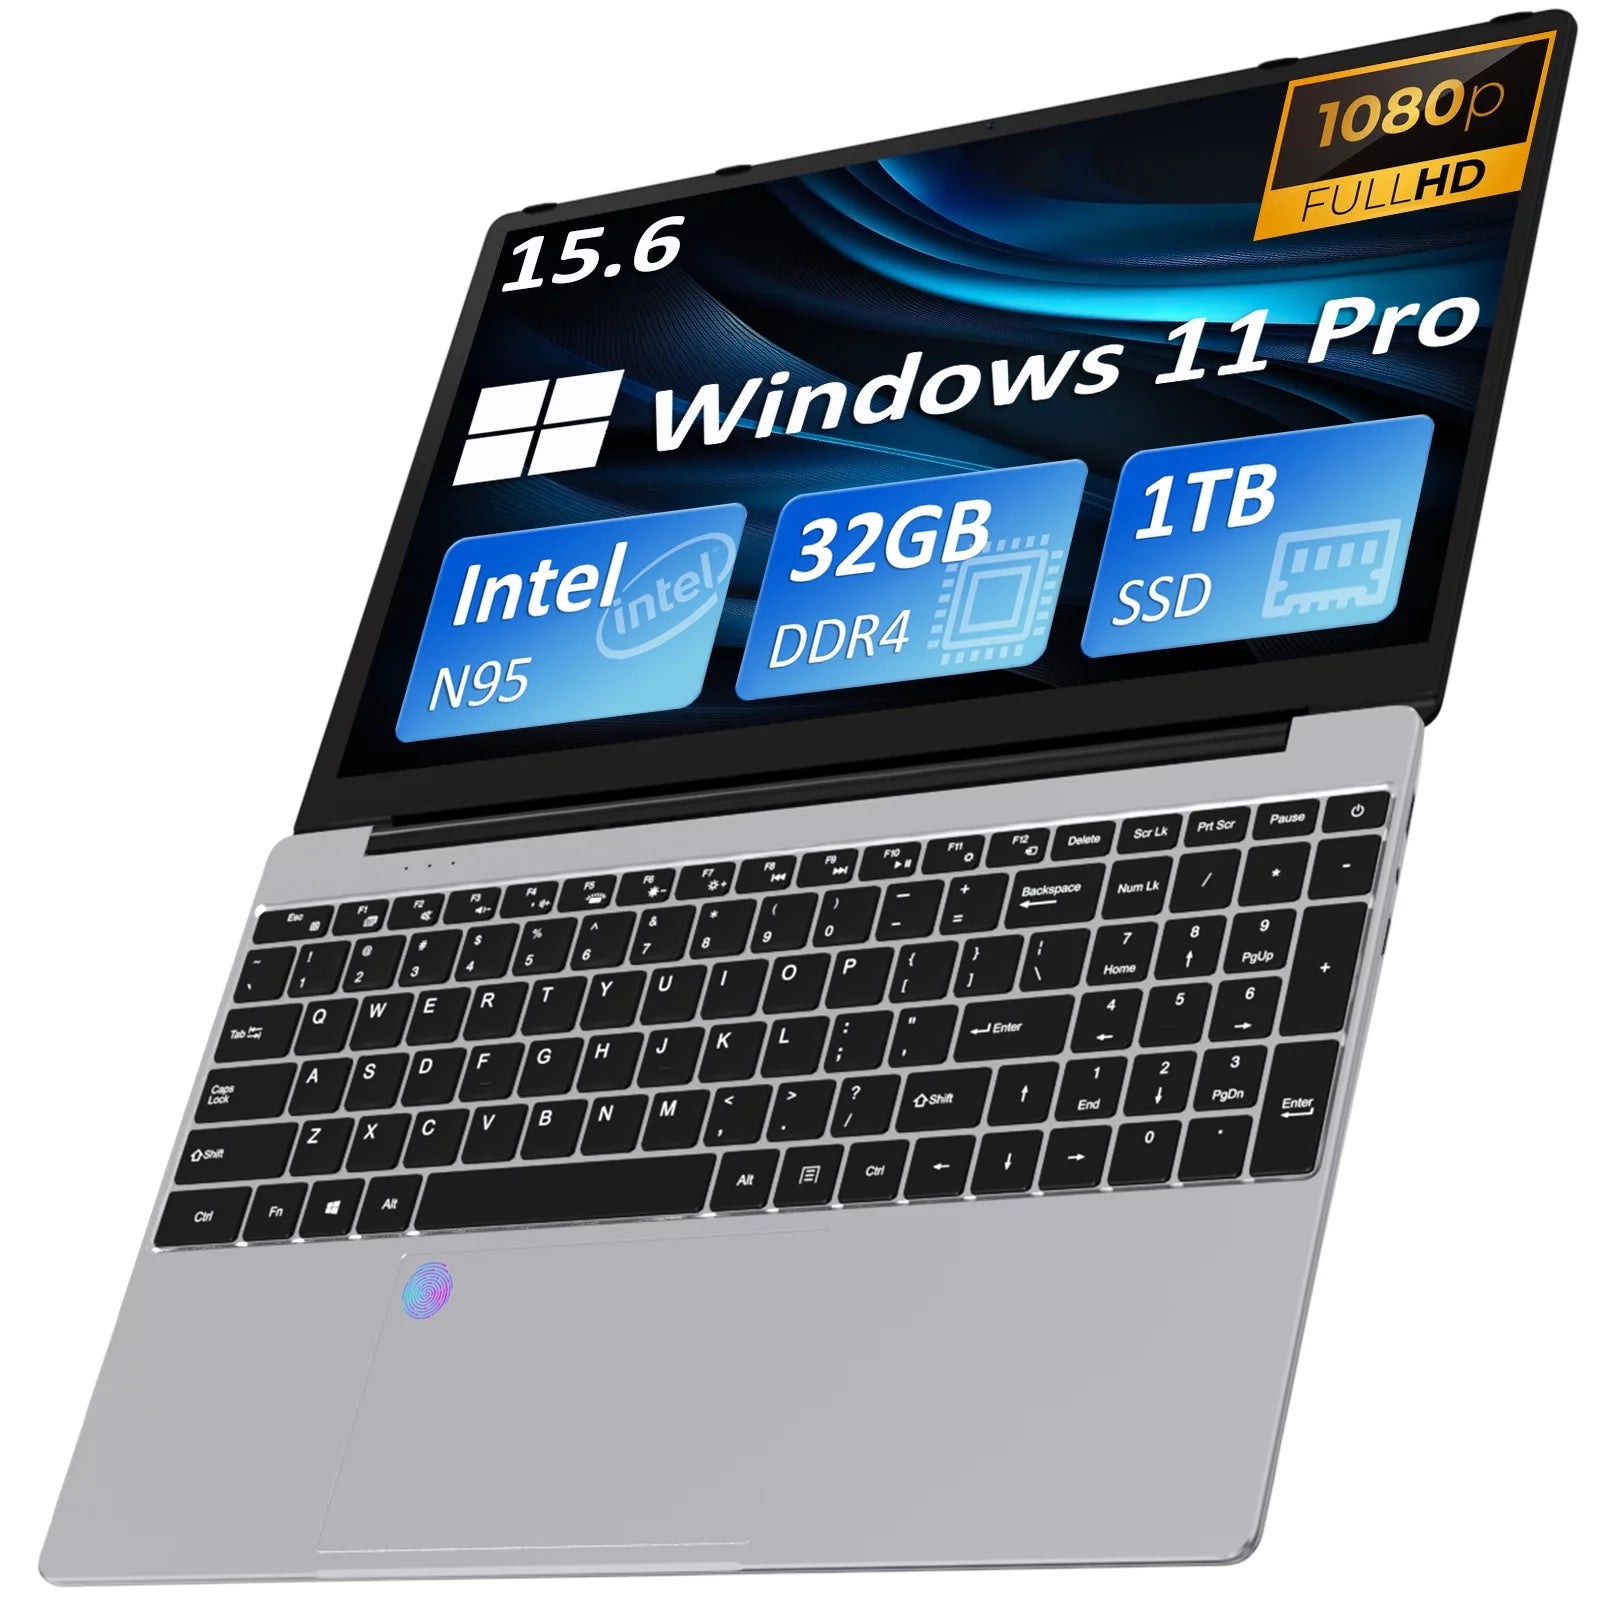 15.6" Laptop Computer Intel N95 up to 3.4 Ghz, 32GB DDR4 RAM, 1TB Nvme SSD, Windows 11 Pro